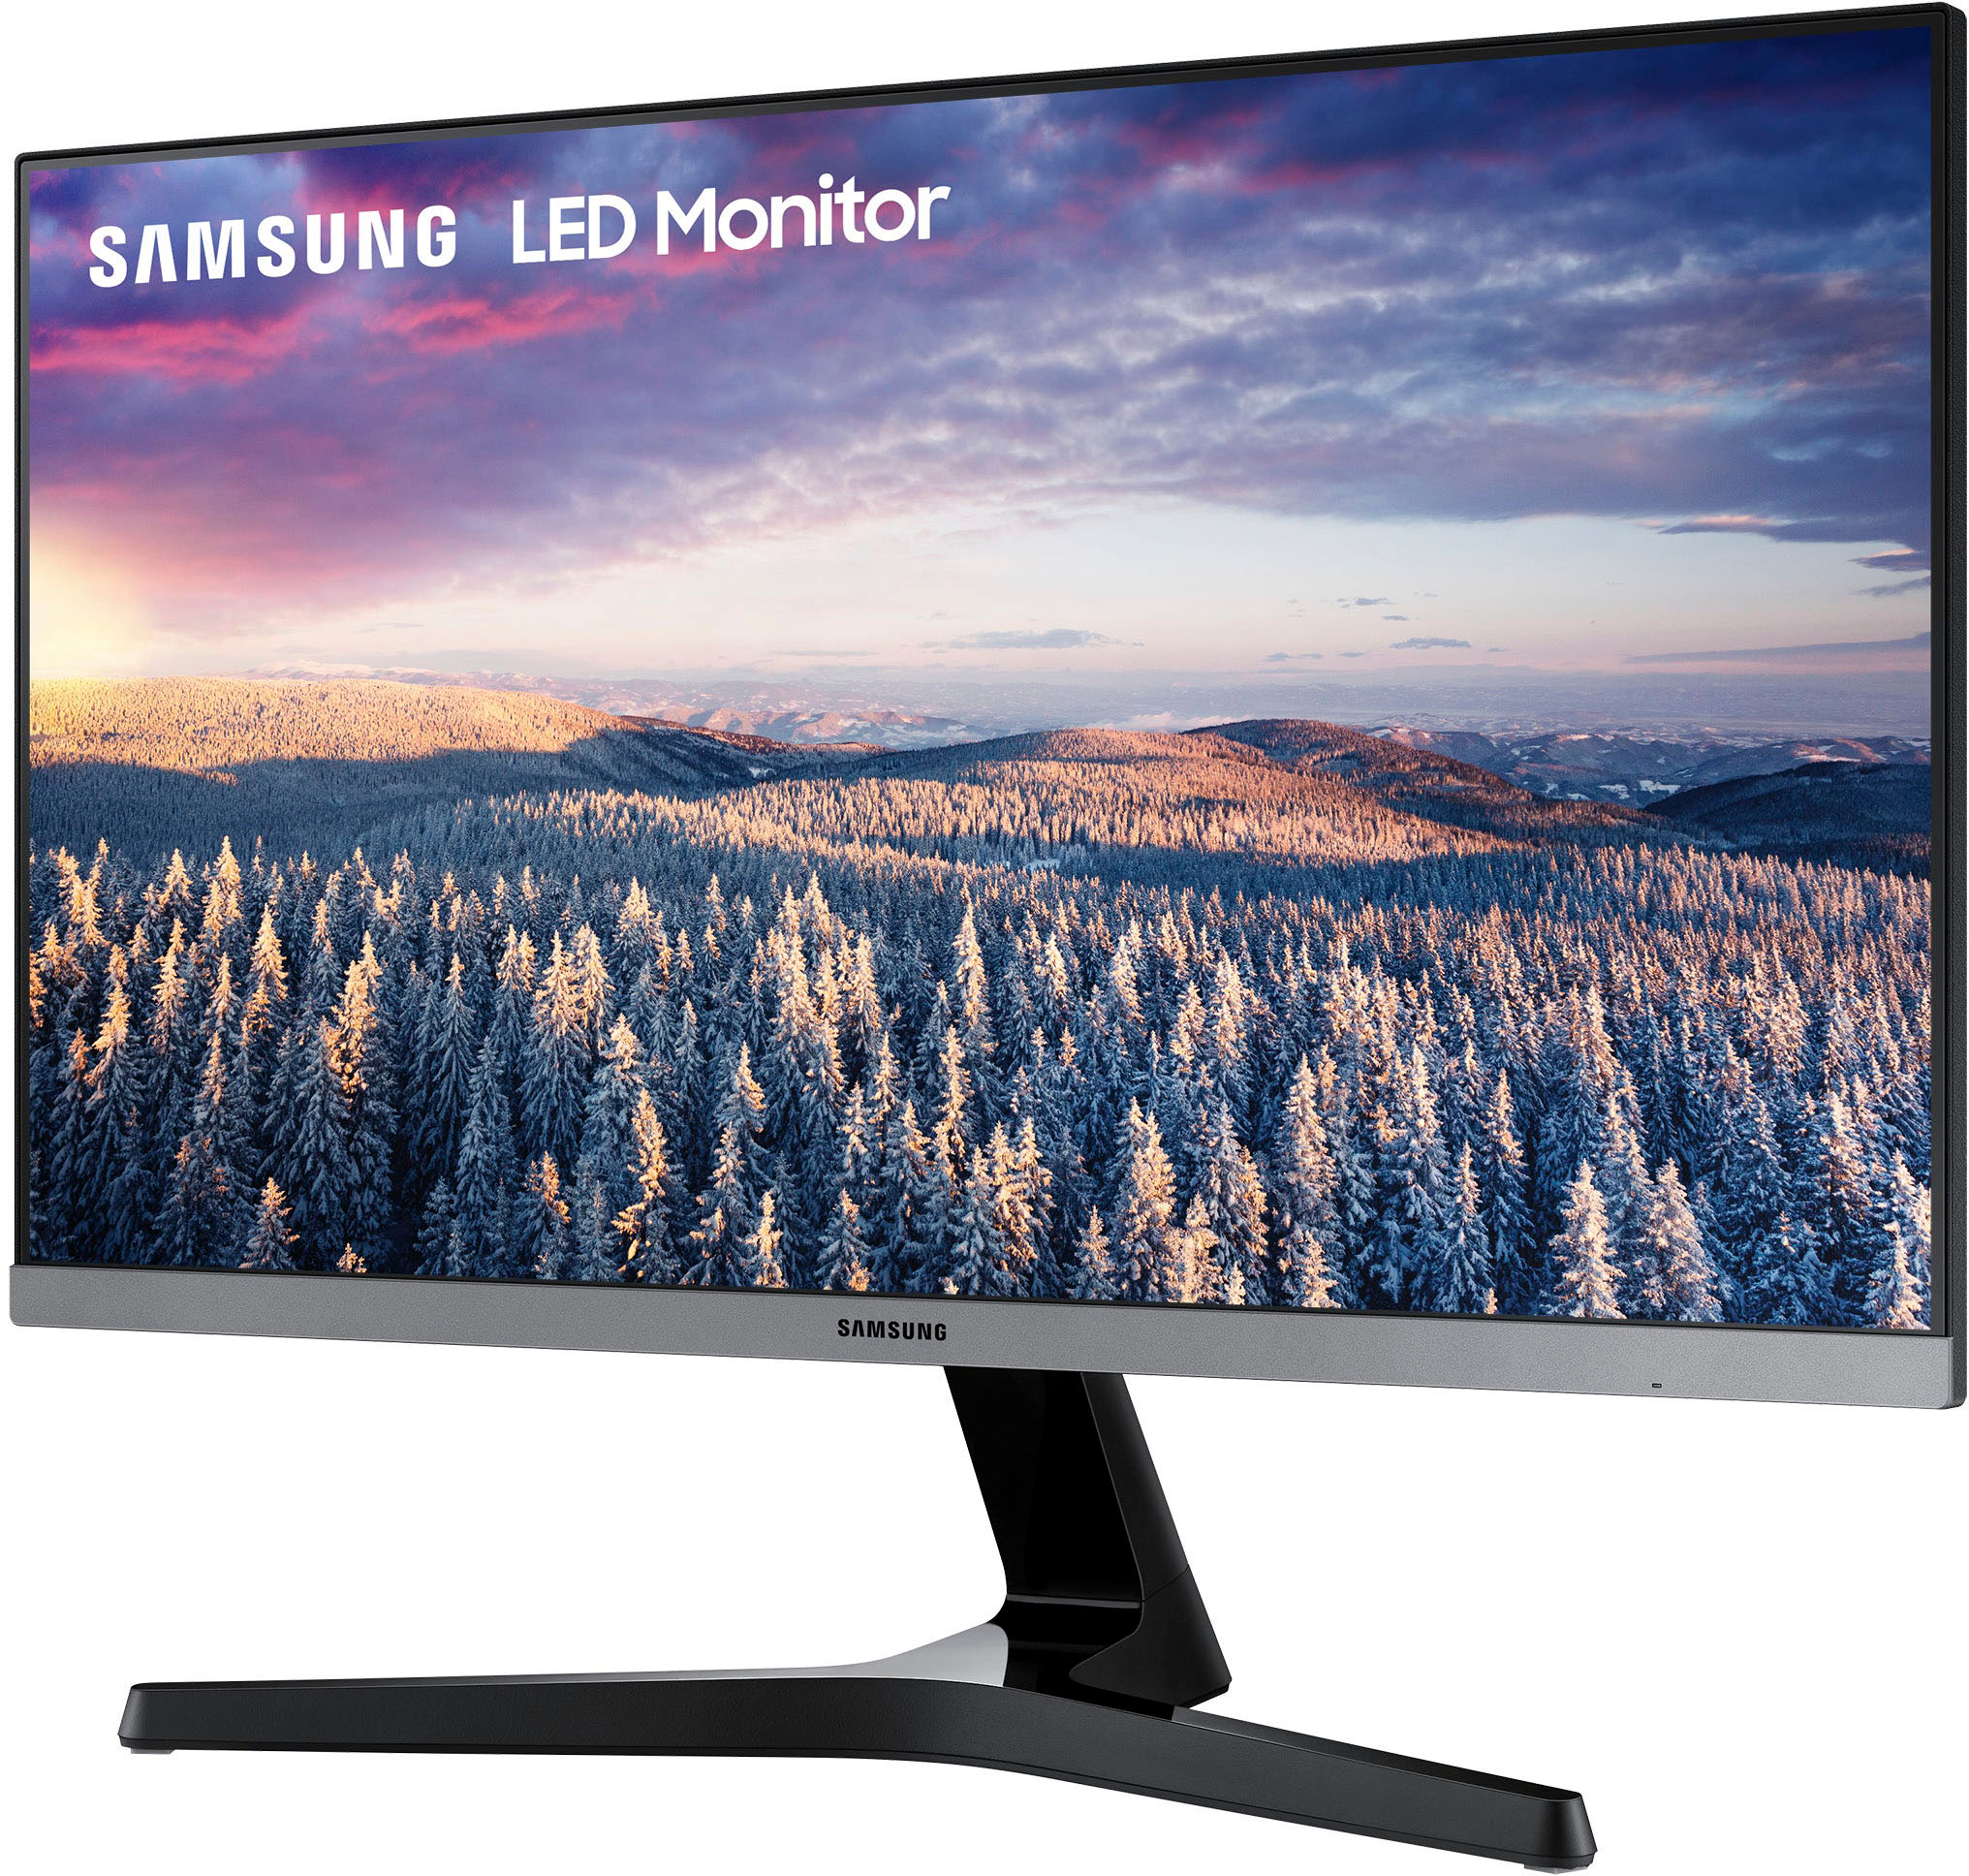 Samsung 24" FHD AMD FreeSync Monitor with bezel-less design (HDMI, D-sub) Black LS24R35AFHNXZA - Best Buy